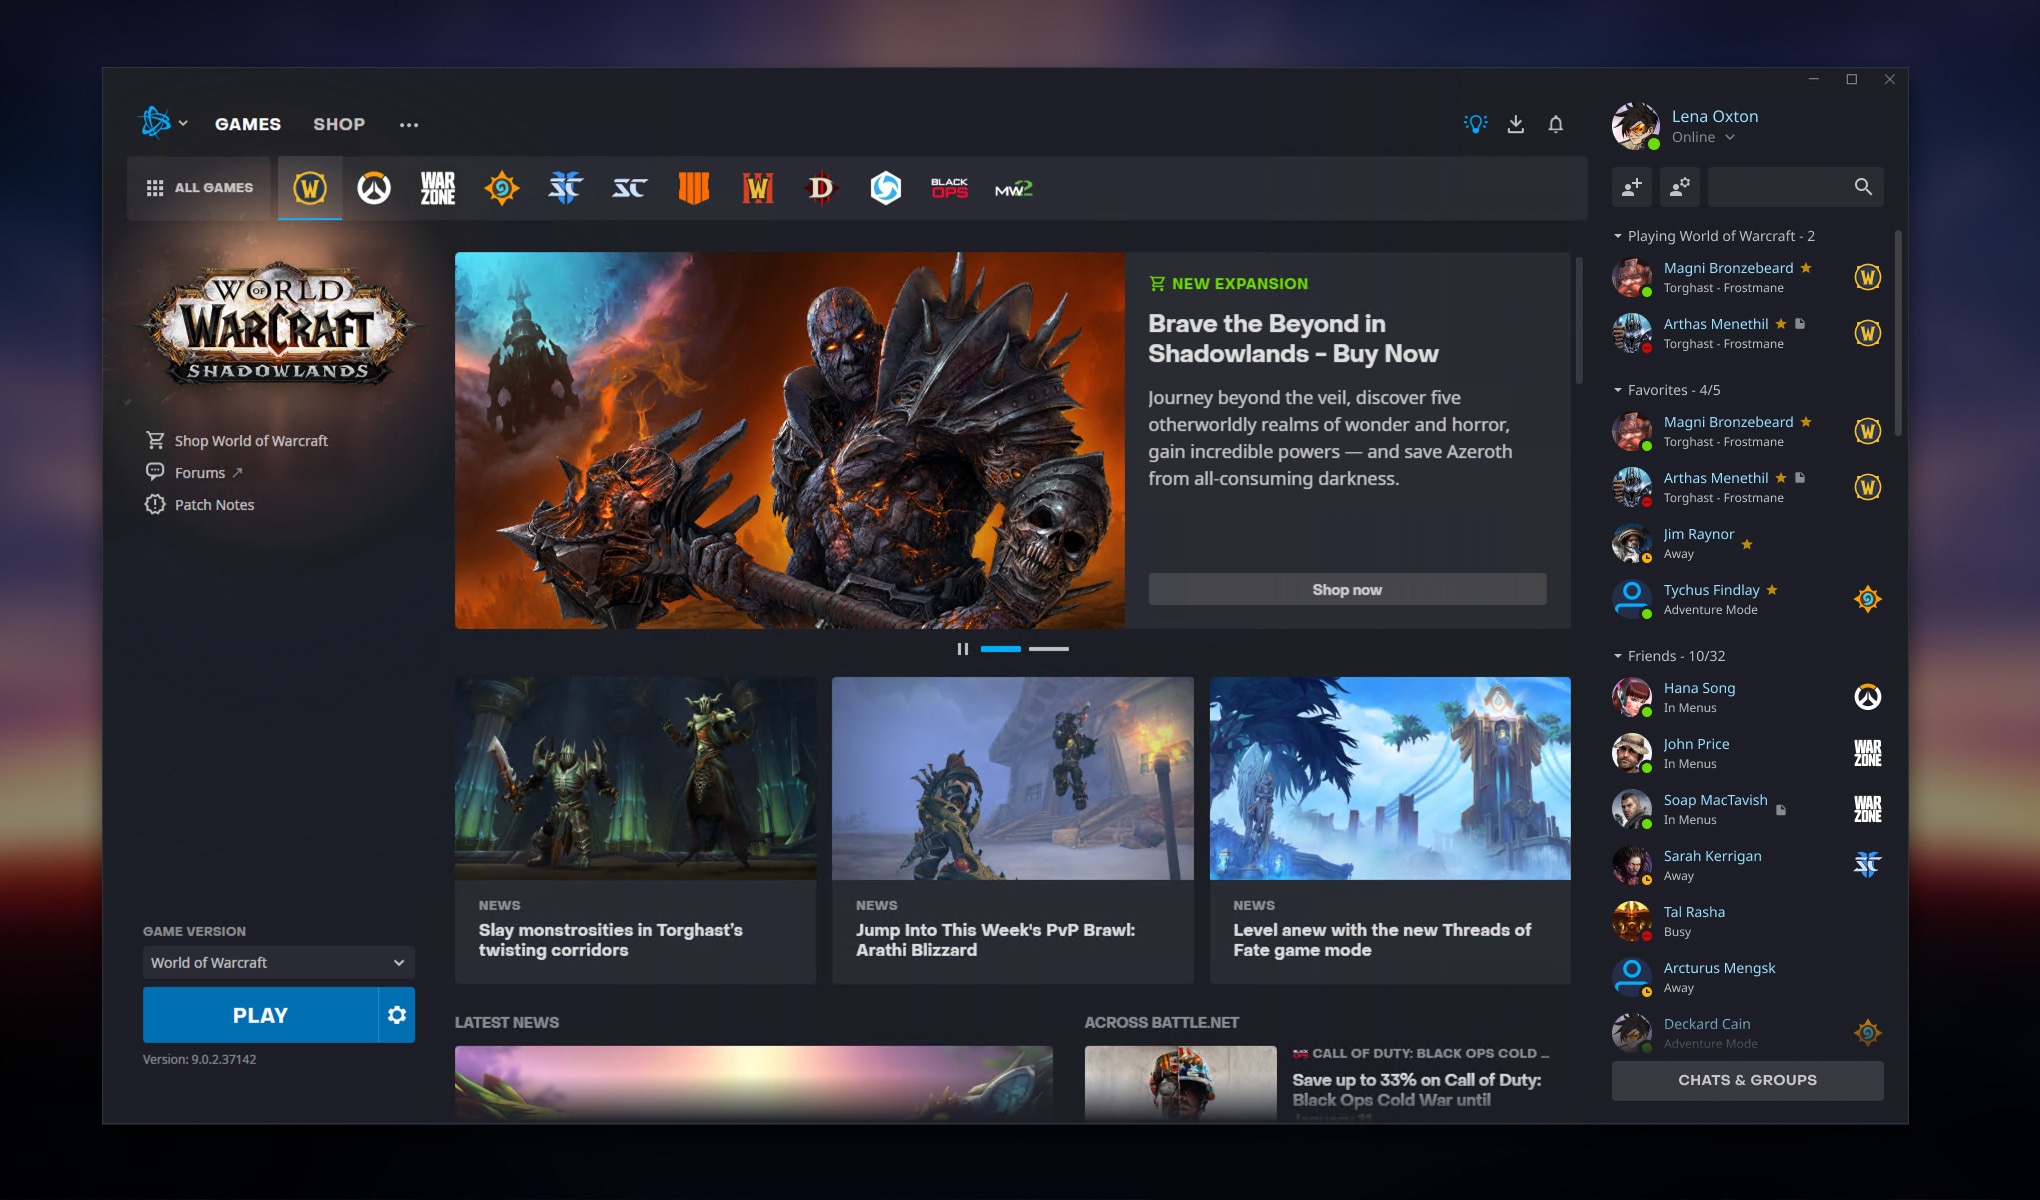 Launch the Battle.net desktop app.
Click on the "World of Warcraft" tab.